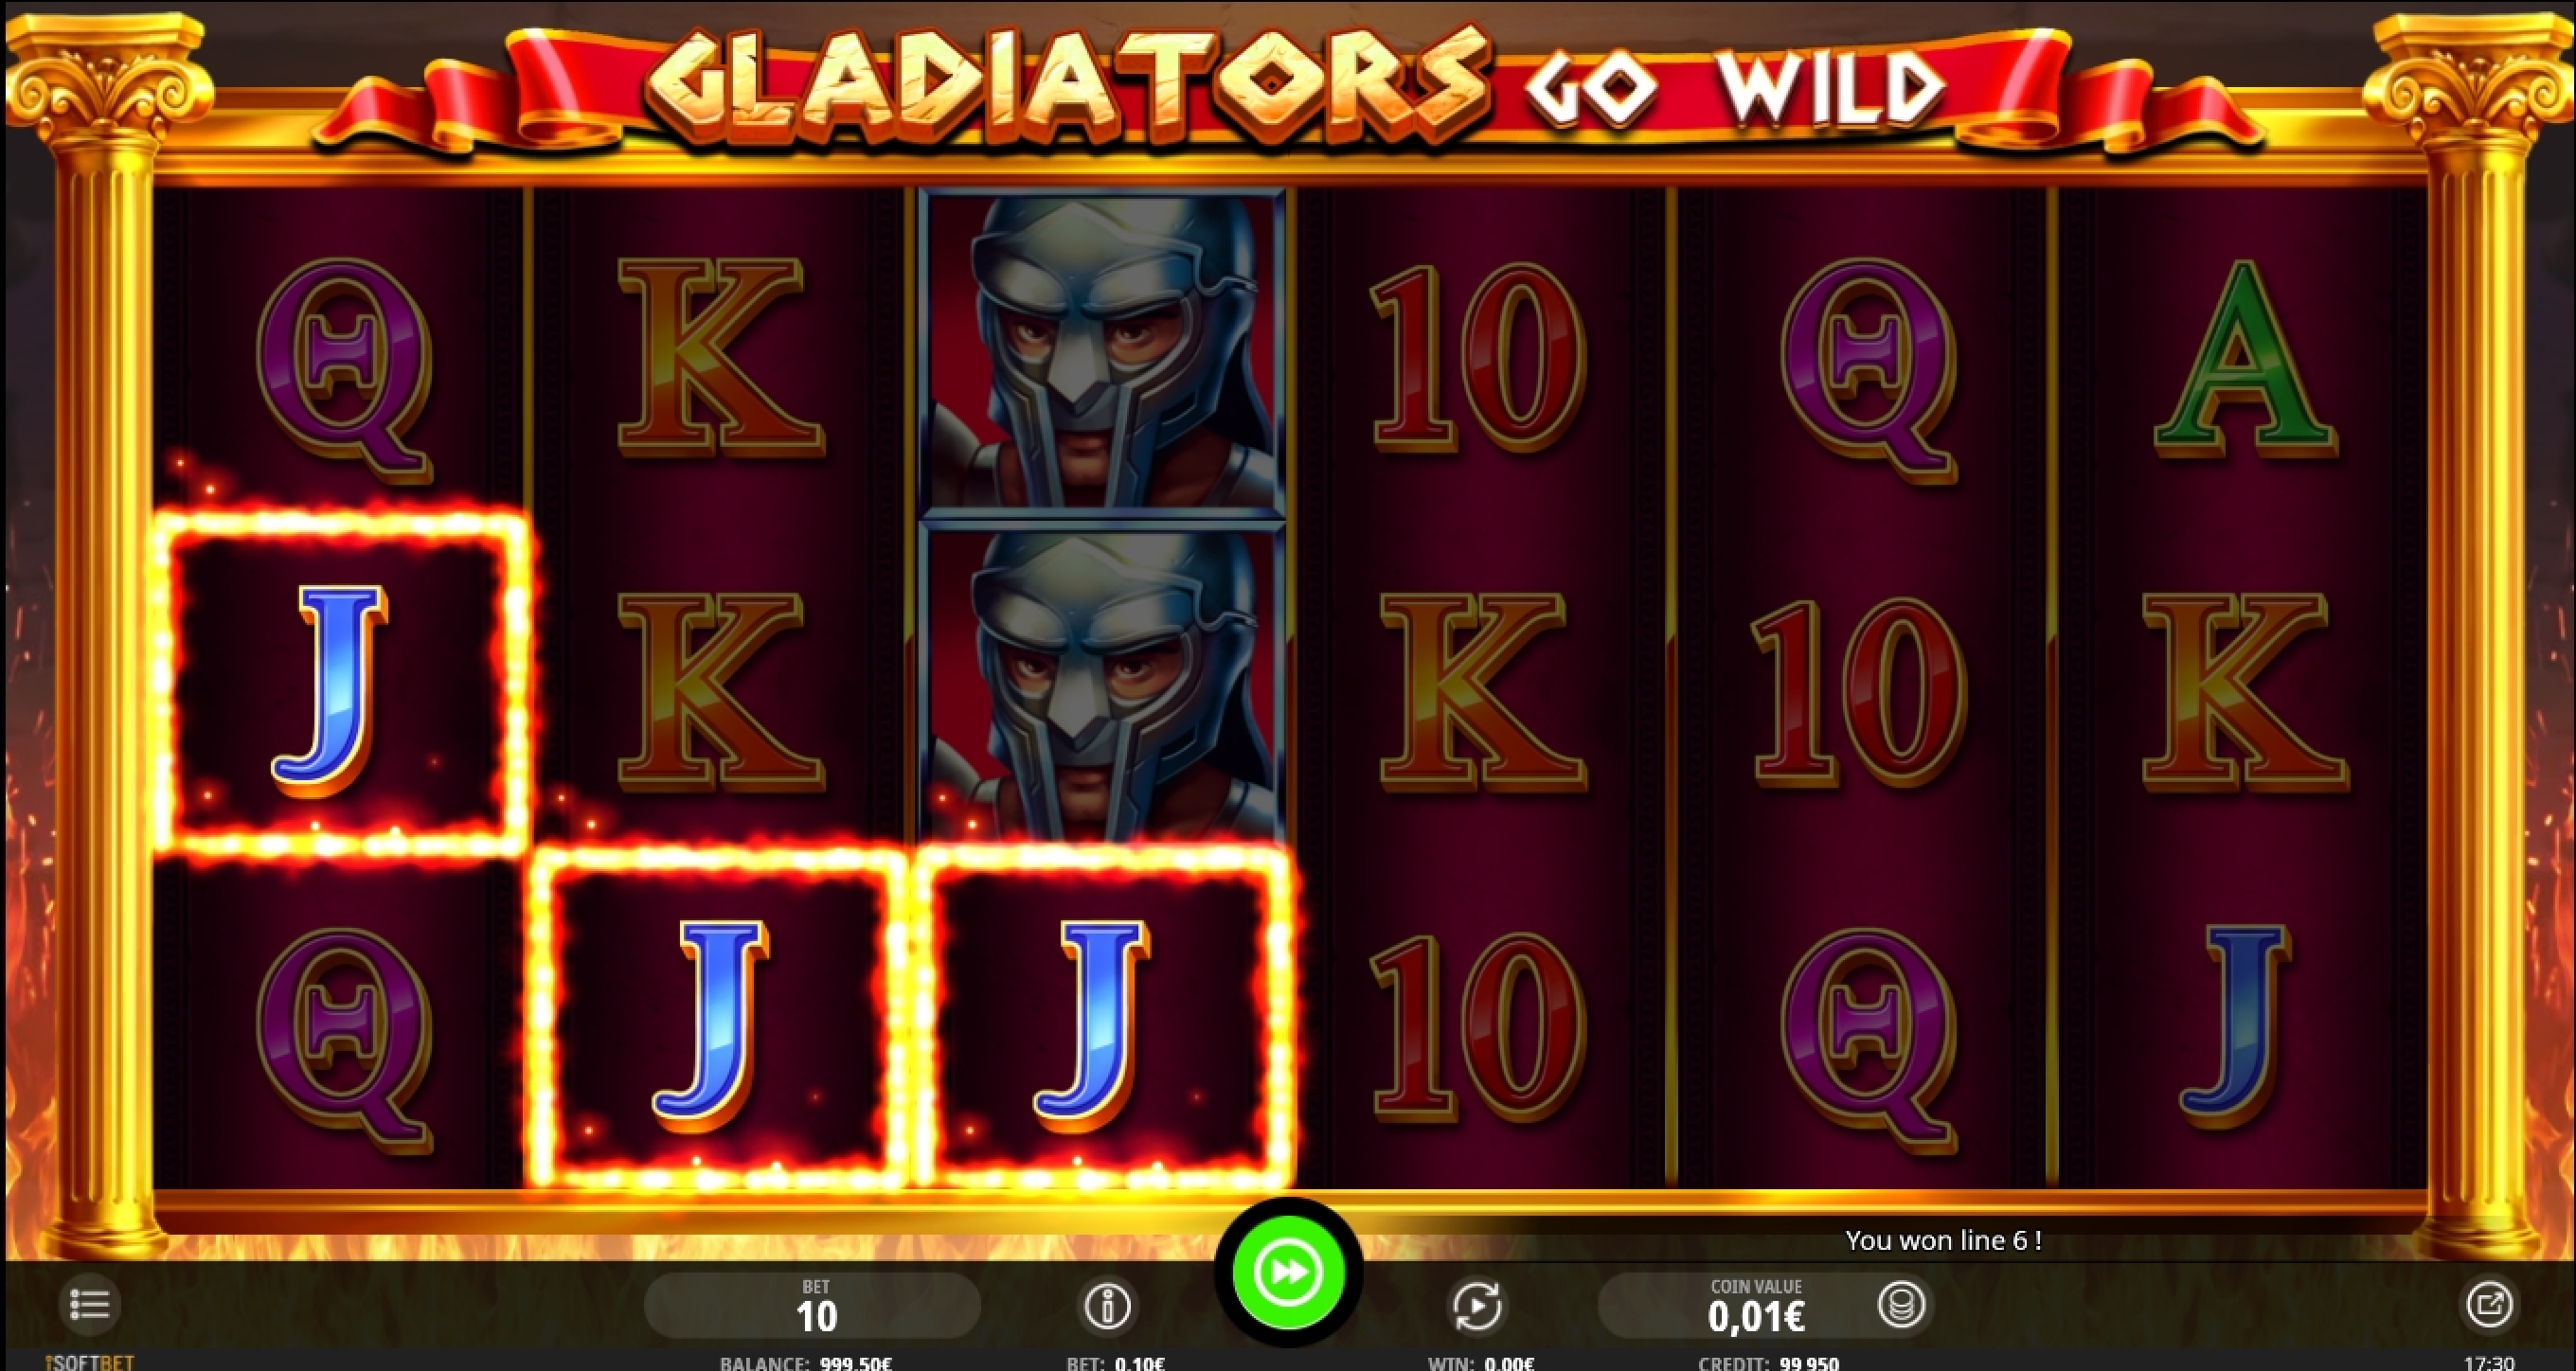 Win Money in Gladiators Go Wild Free Slot Game by iSoftBet